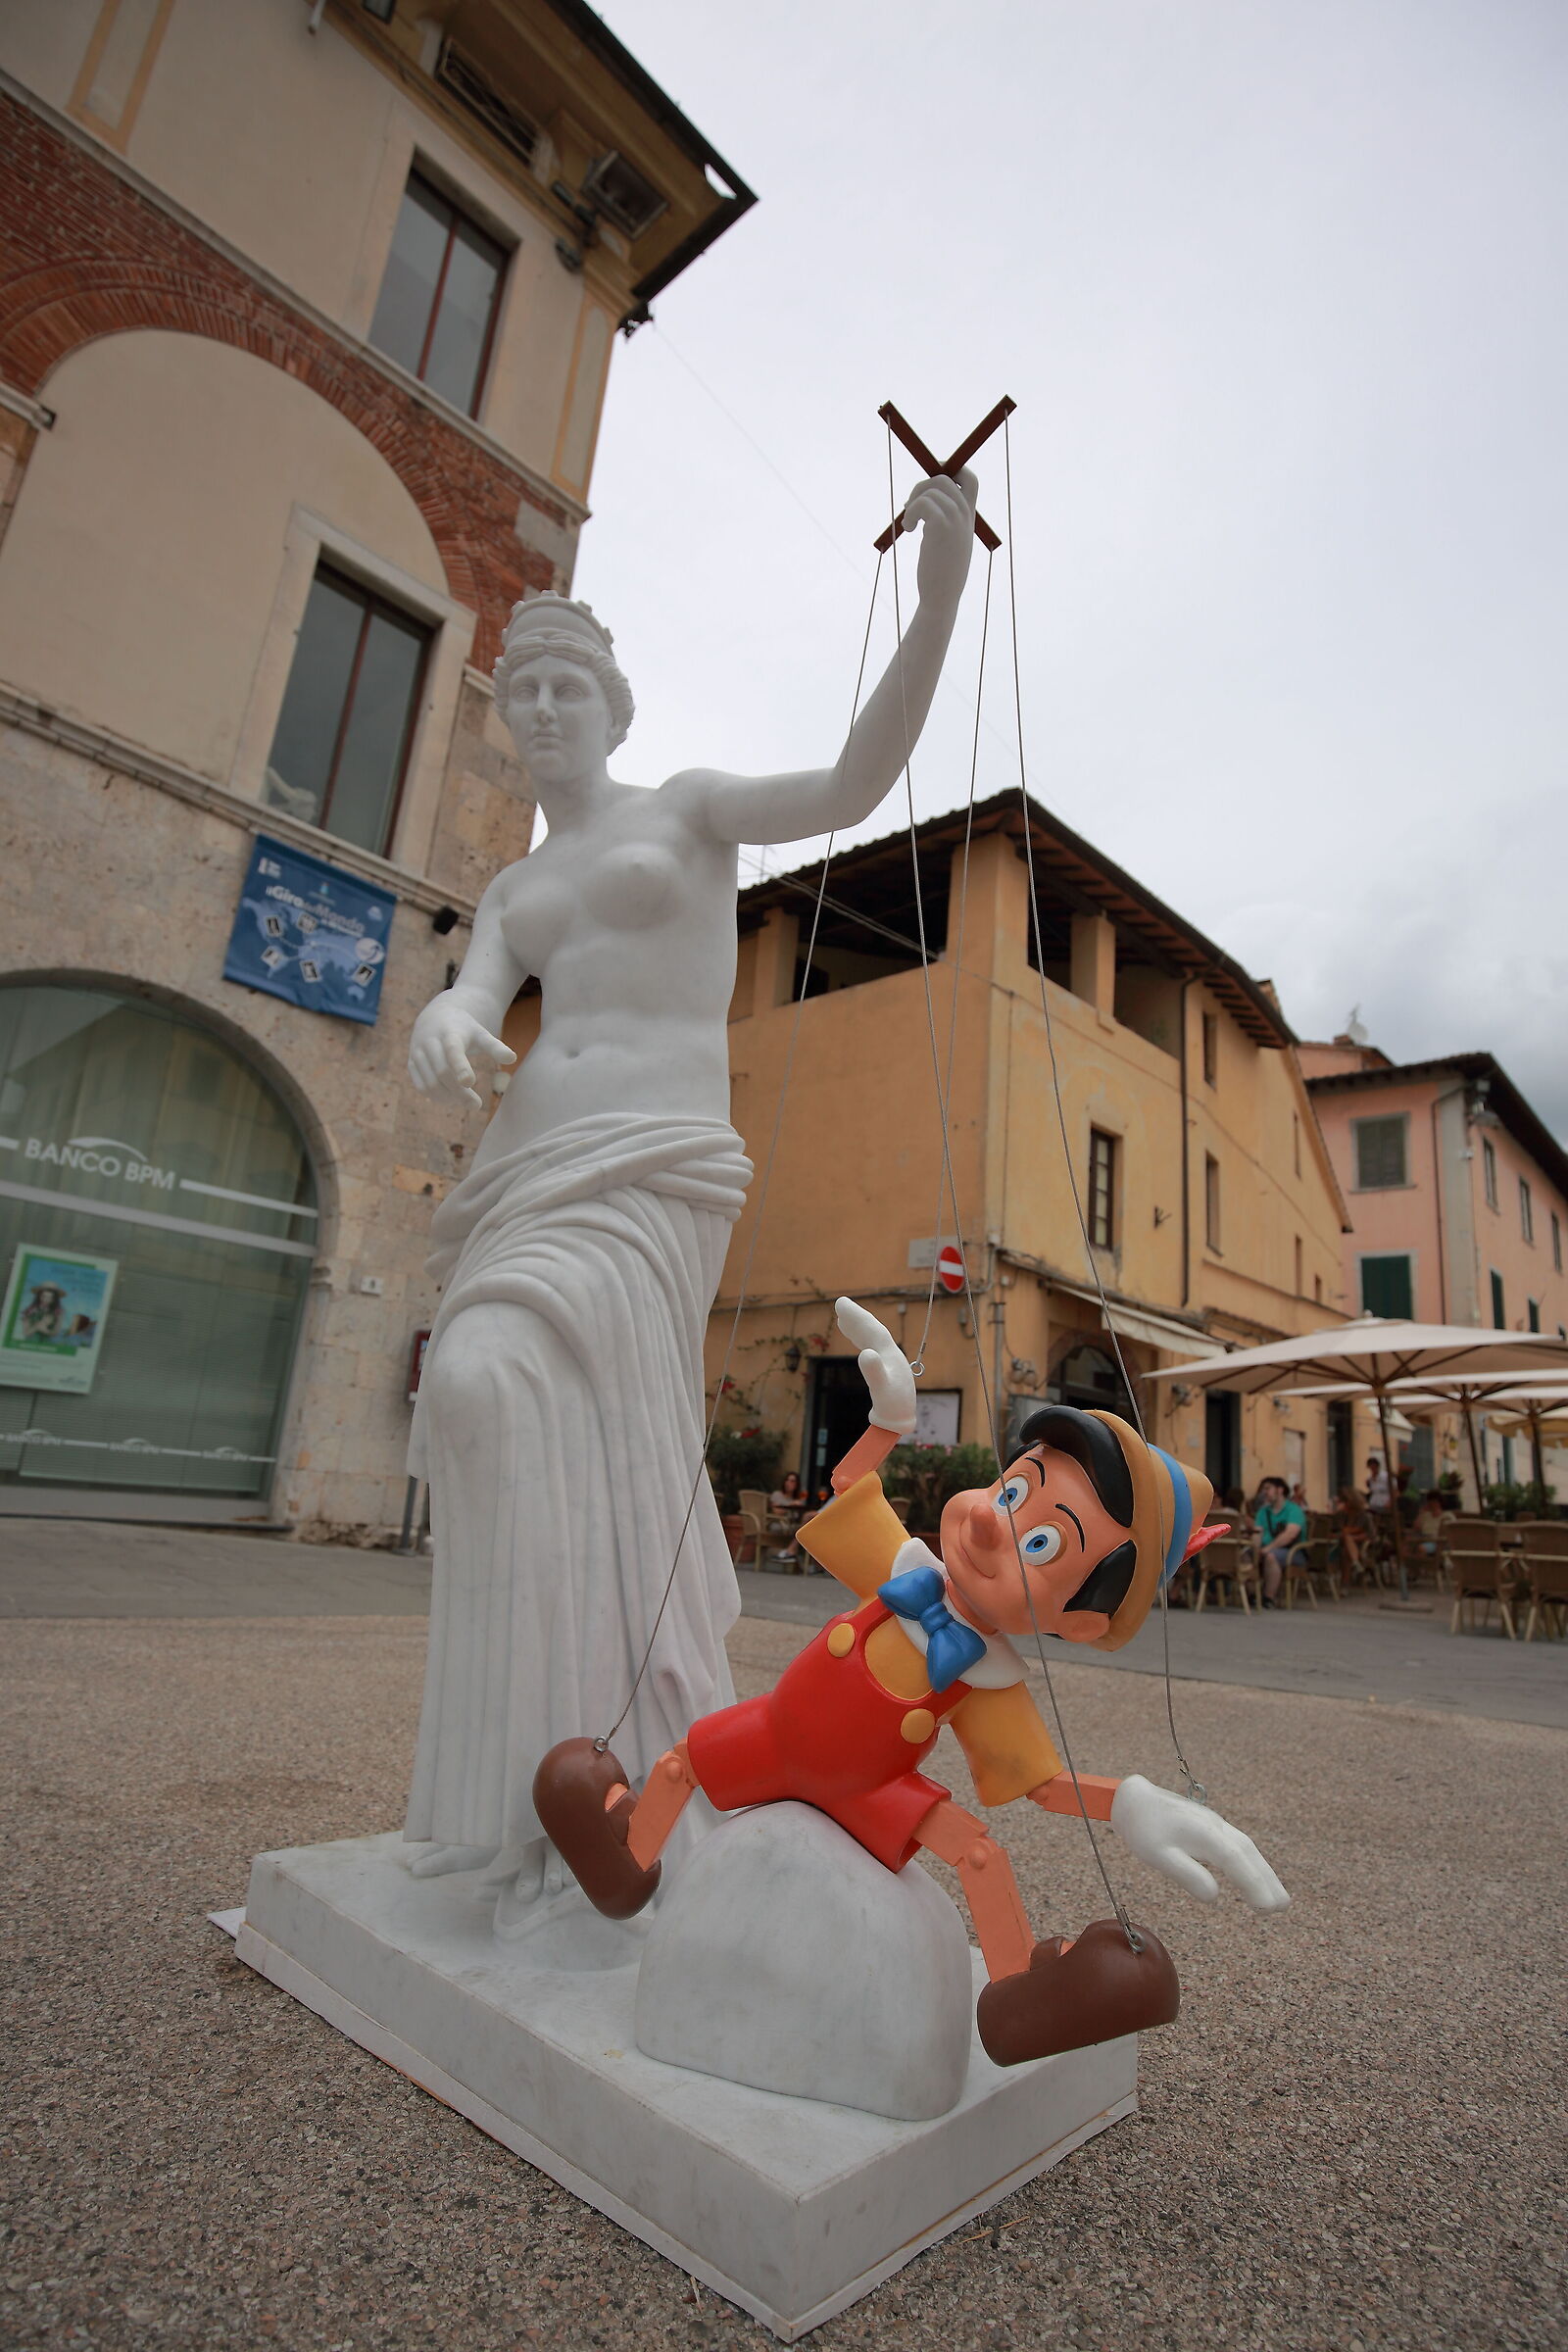 The Triumphant Venus maneuvering the puppet Pinocchio...